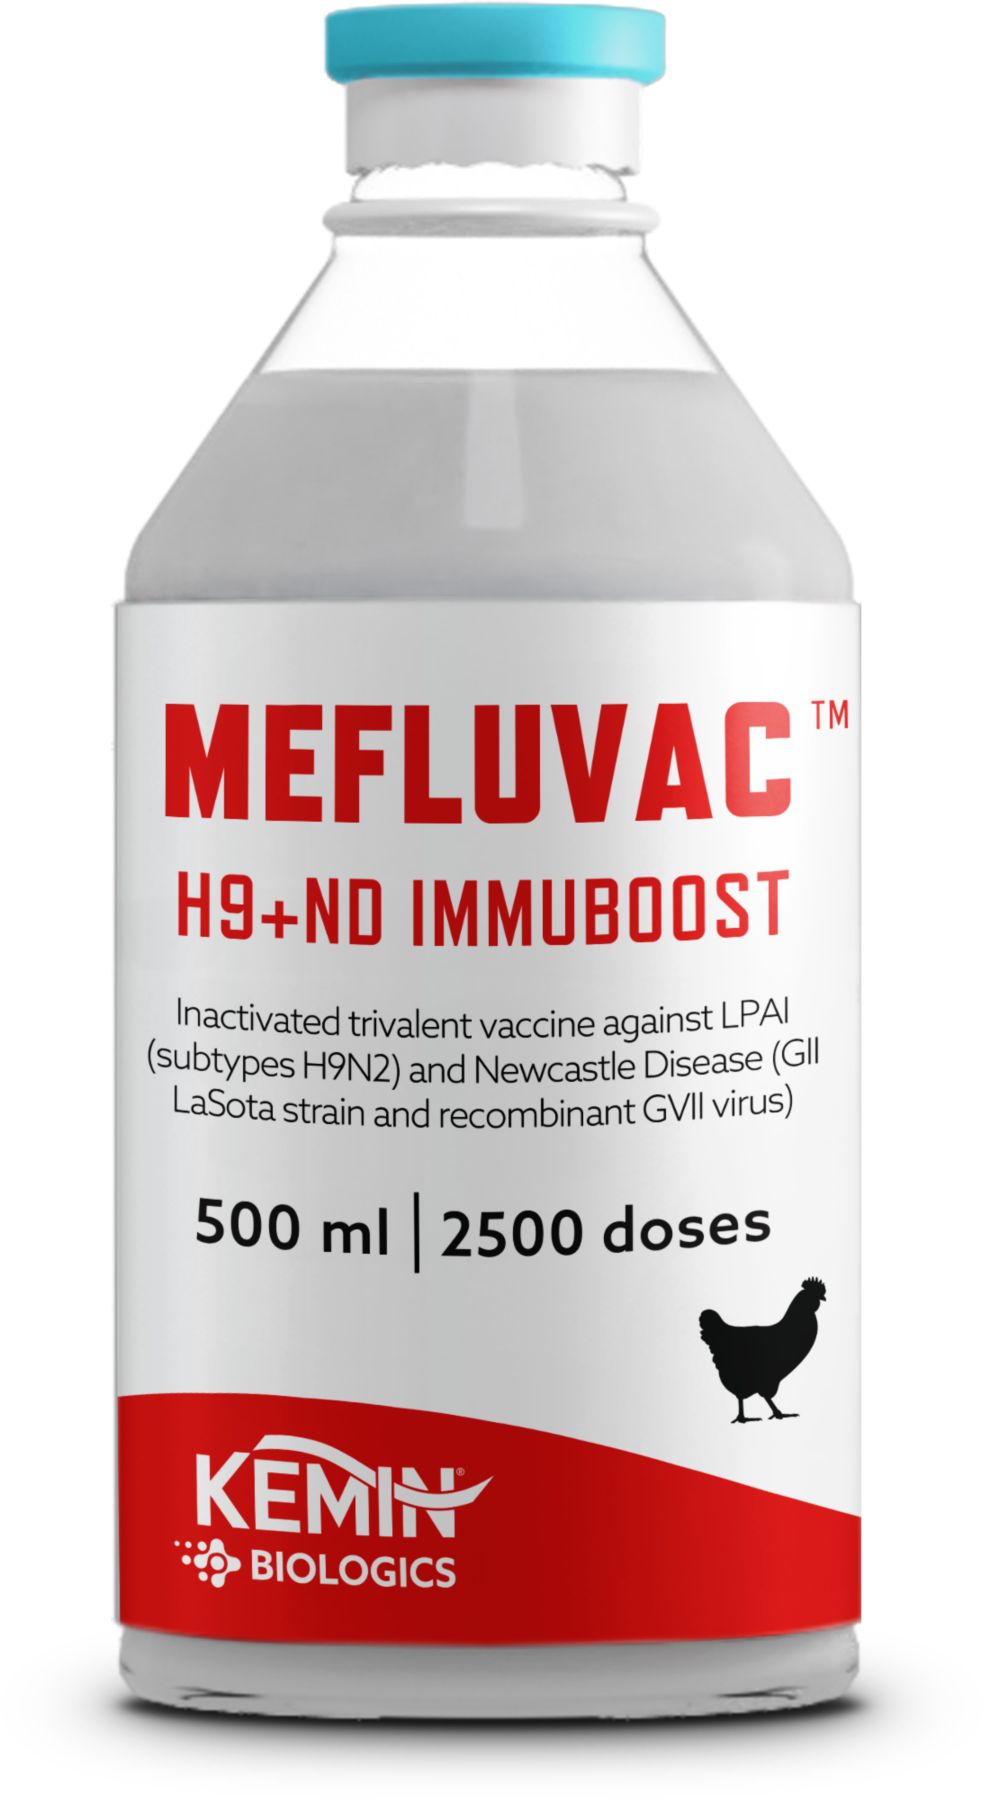 MEFLUVAC H9 ND IMMUBOOST big label mockup